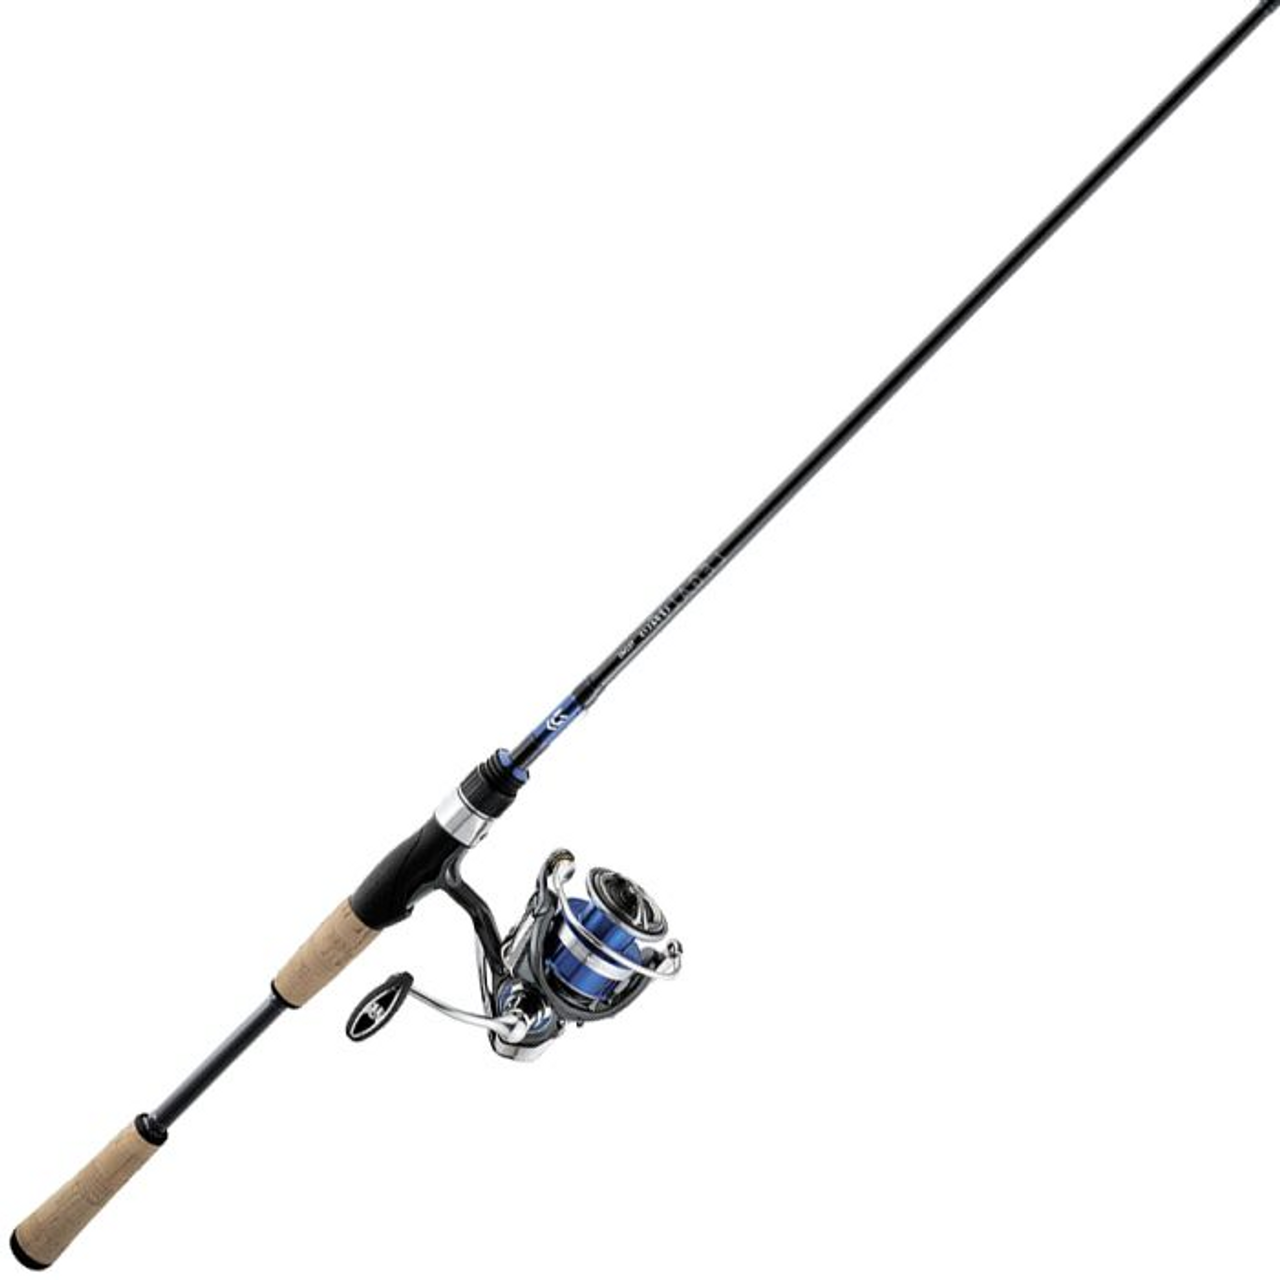  Catfish Fishing Rod And Reel Combo, 2-Piece